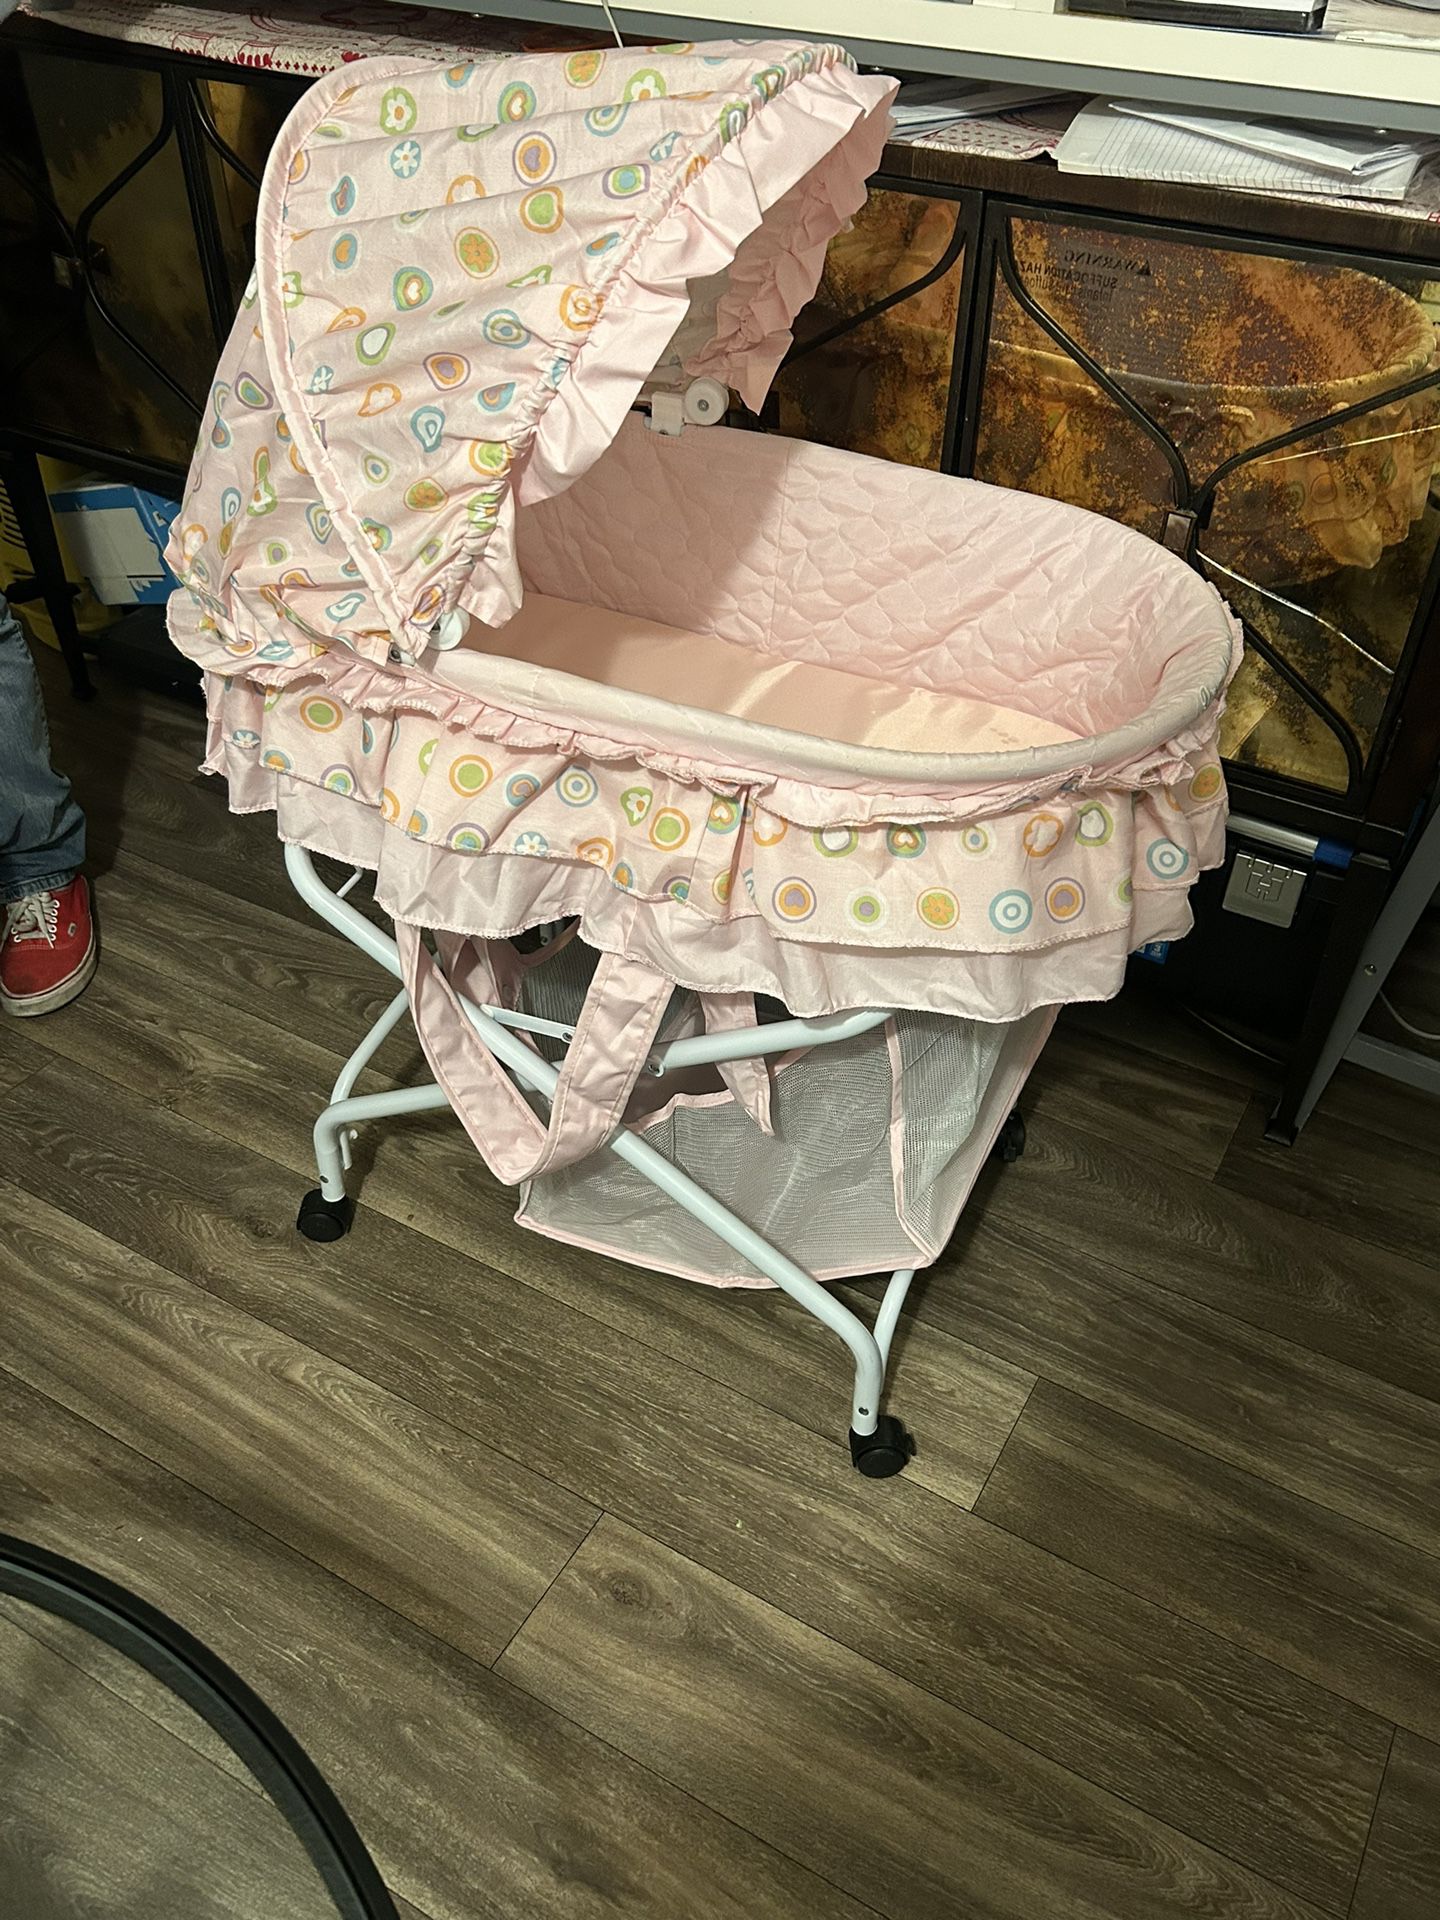 Pink Baby Crib